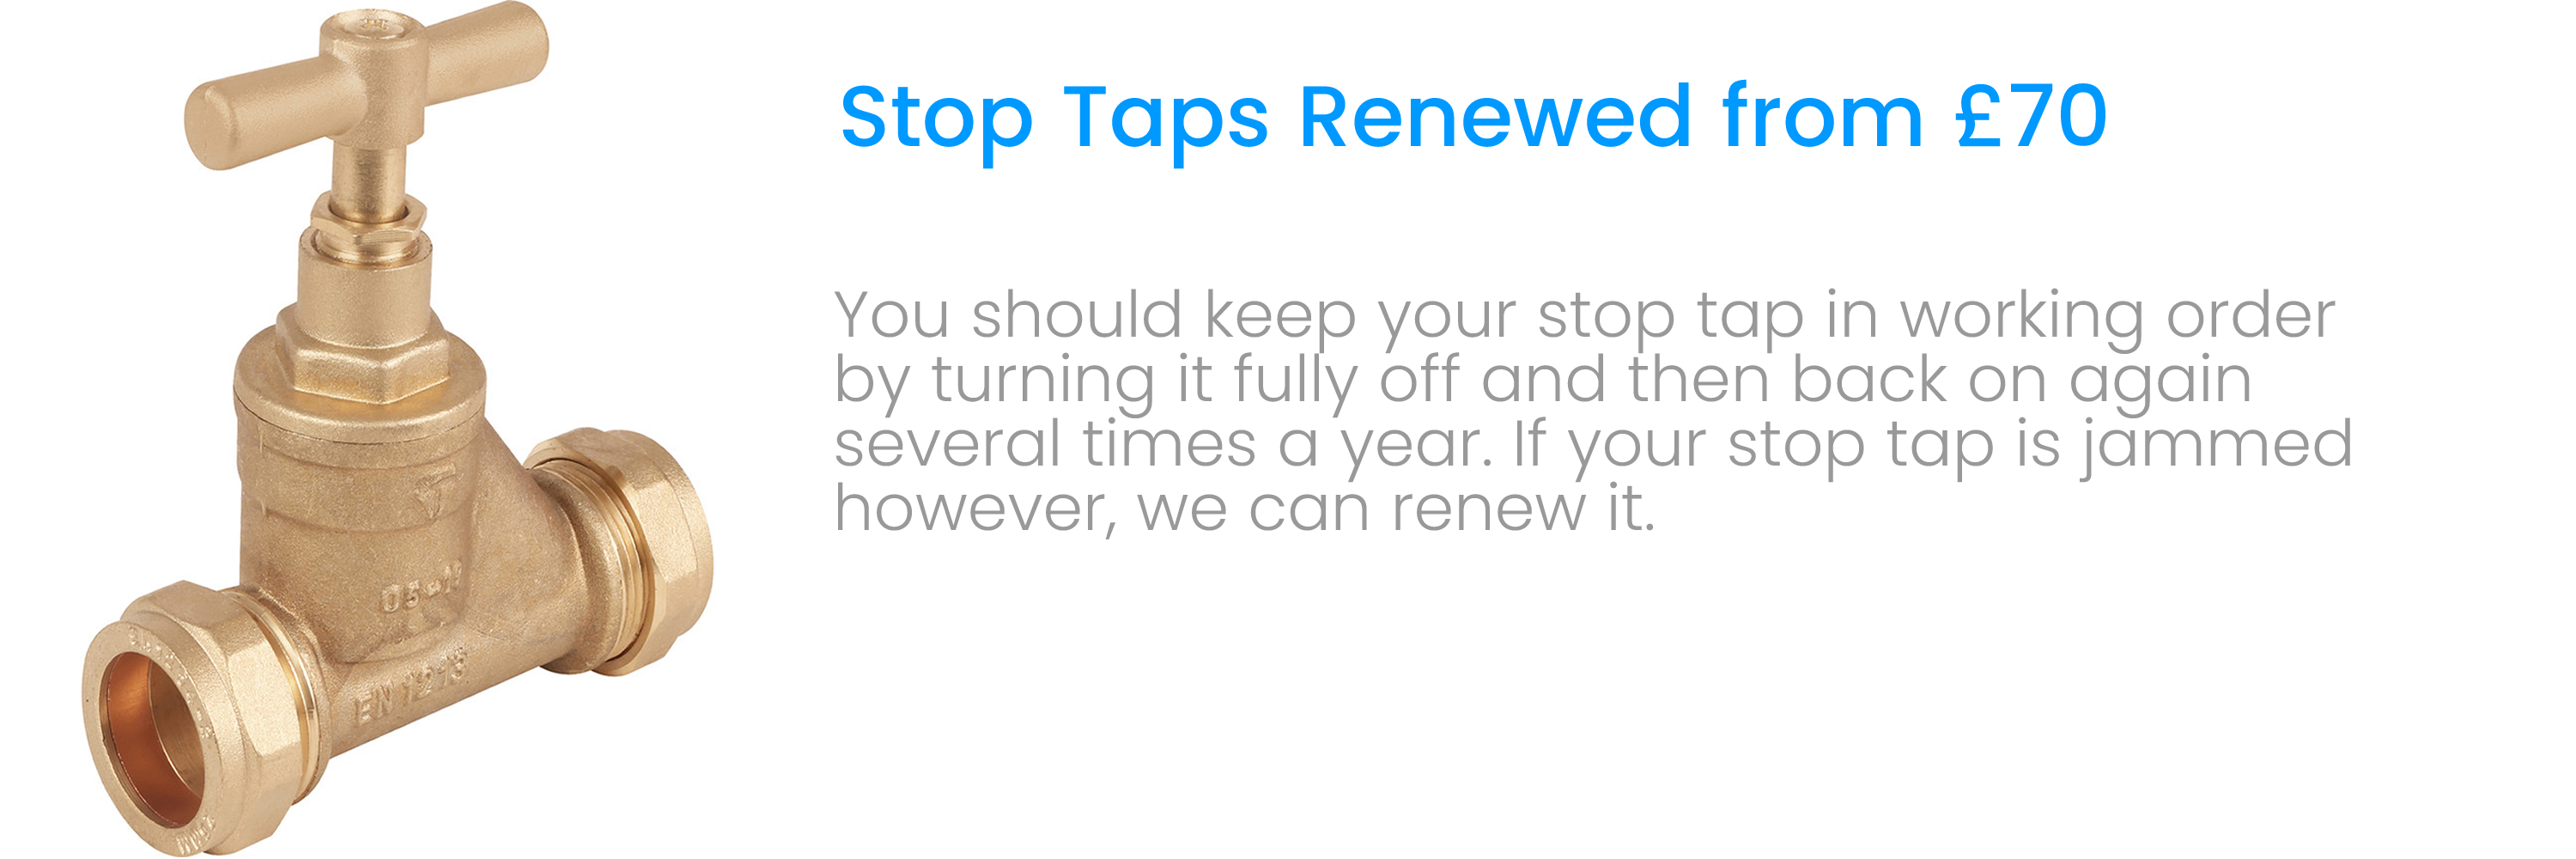 stop tap